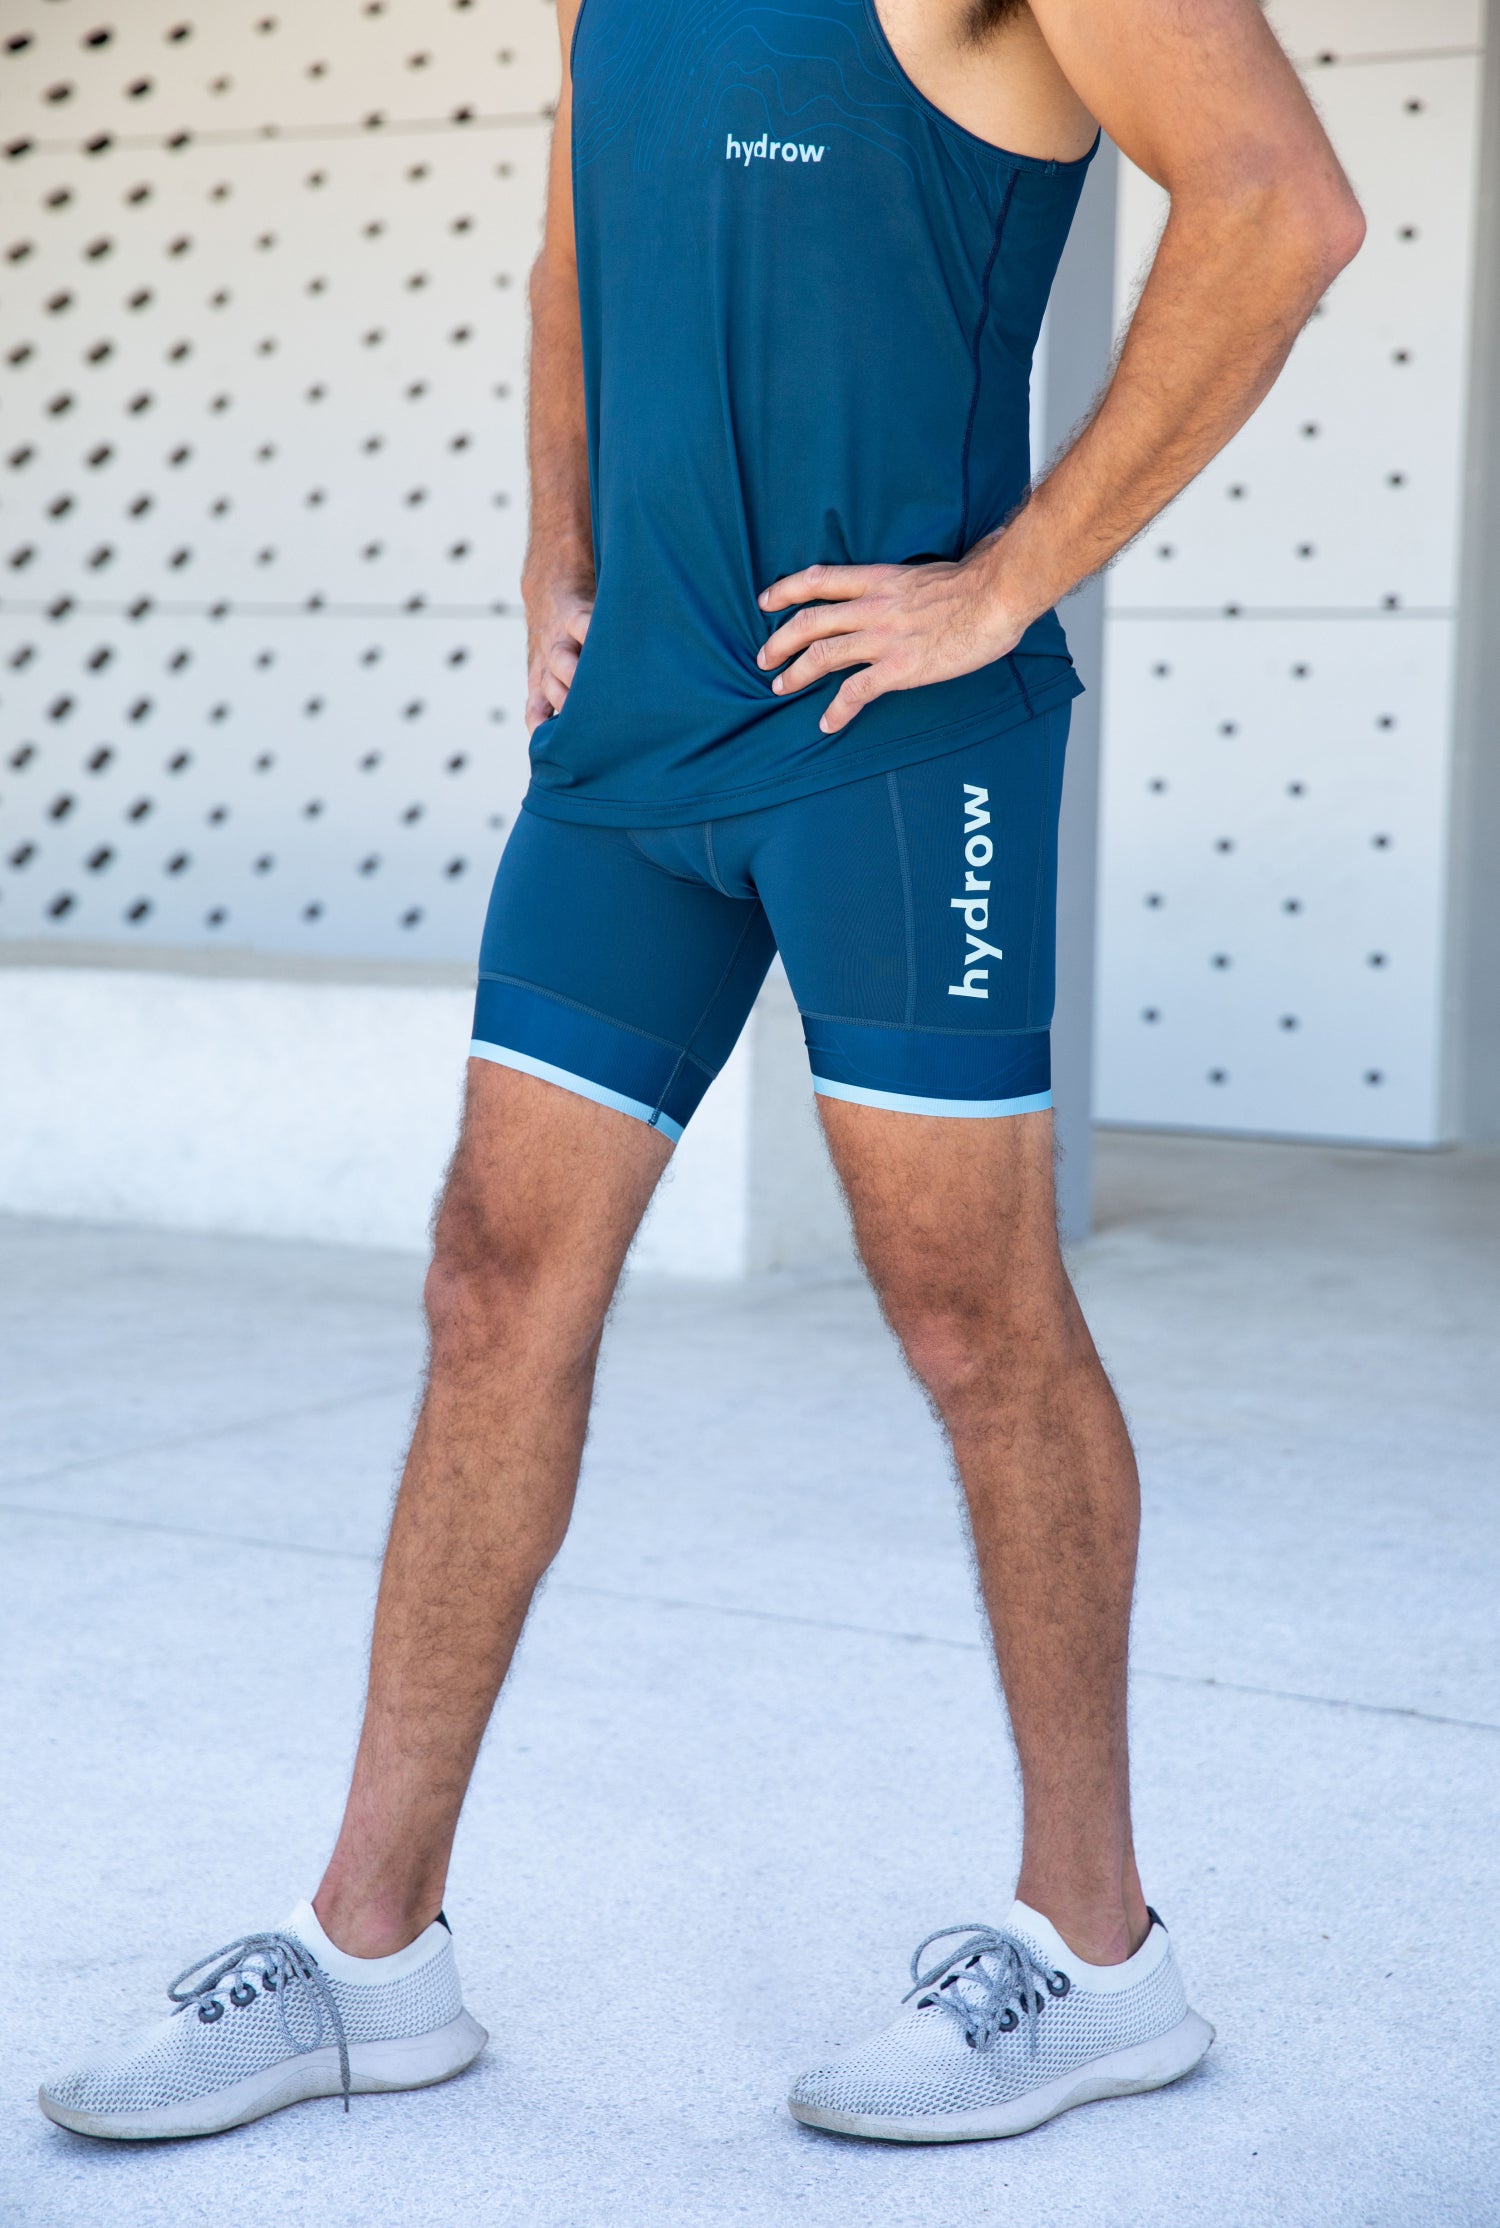 dark blue hydrow shorts with light blue hydrow text on leg